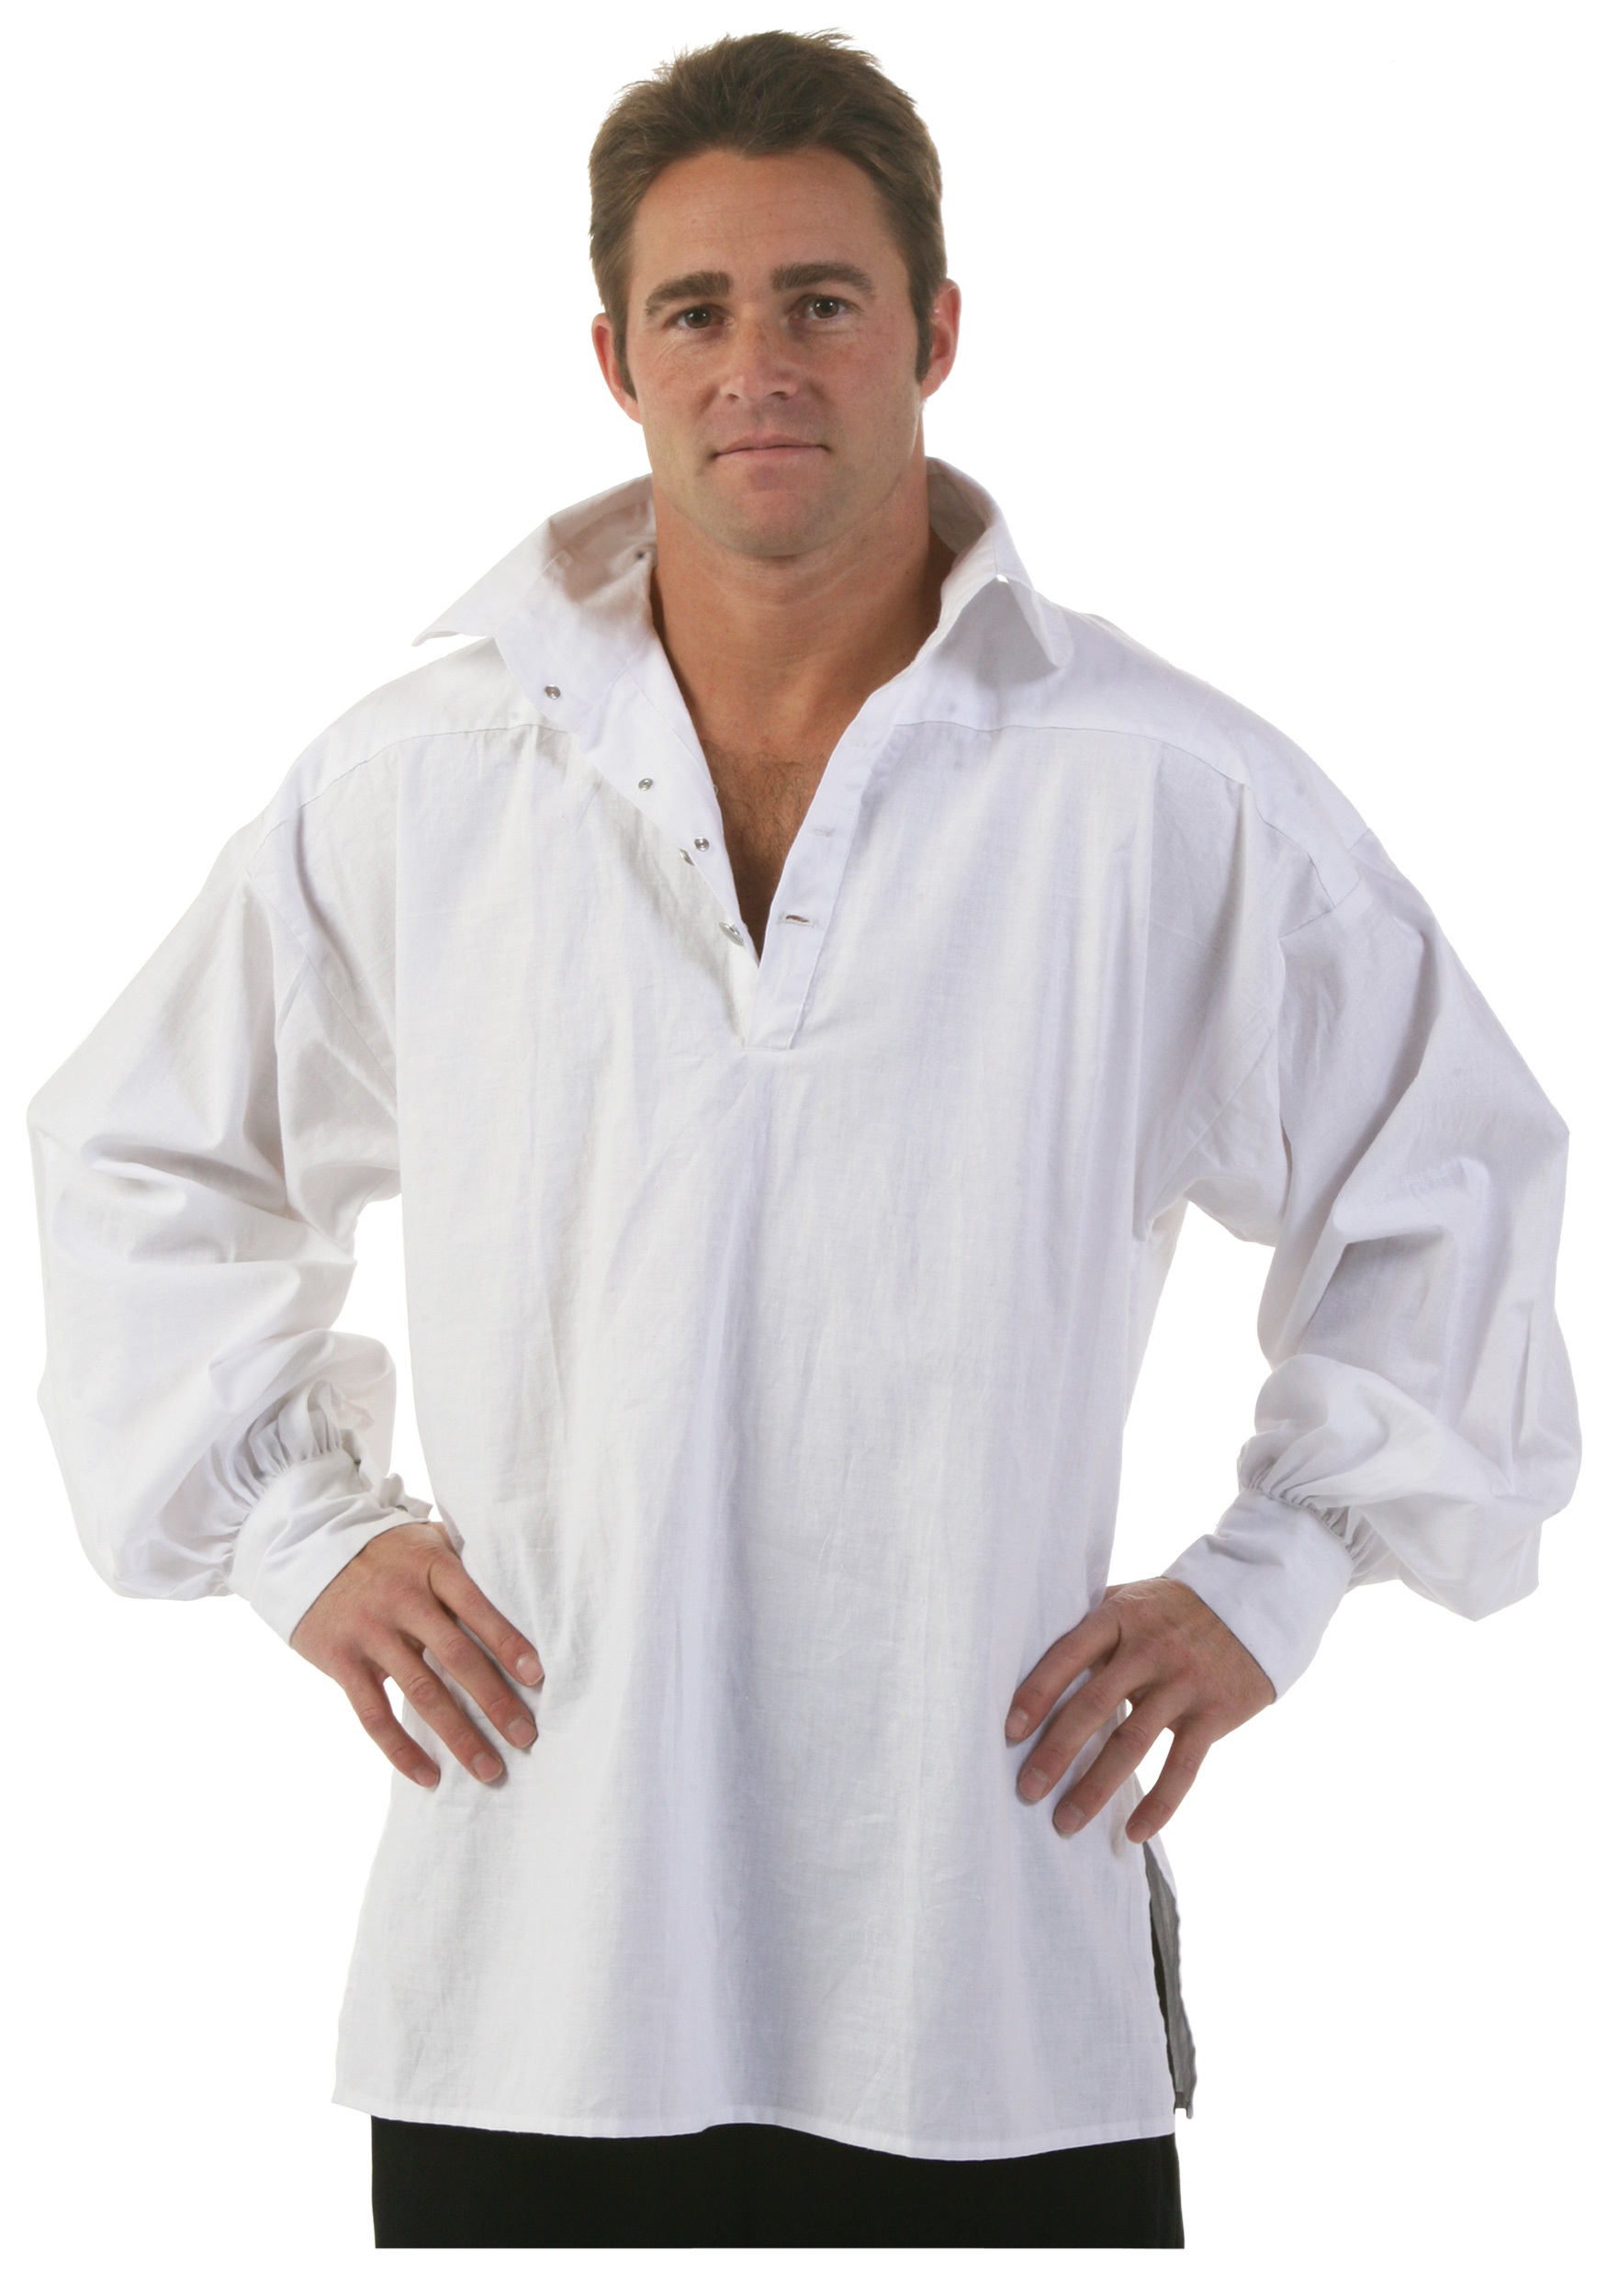 Men's White Renaissance Shirt - Halloween Costume Ideas 2019